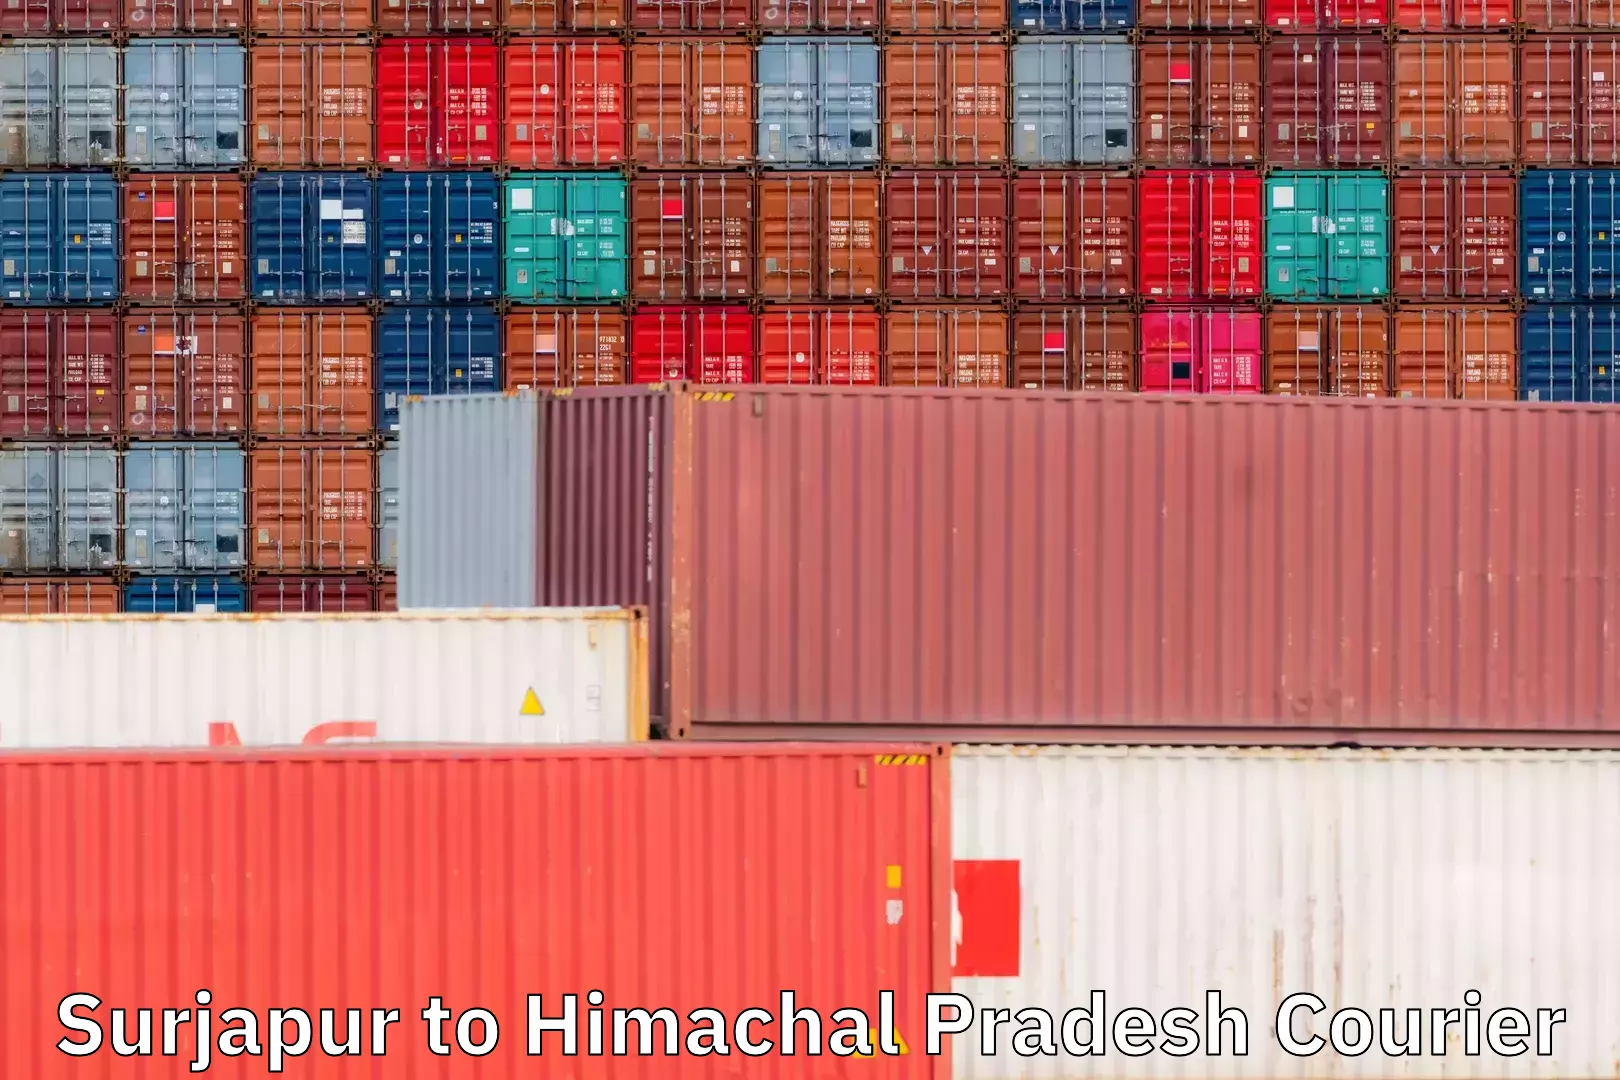 Lightweight parcel options Surjapur to Himachal Pradesh